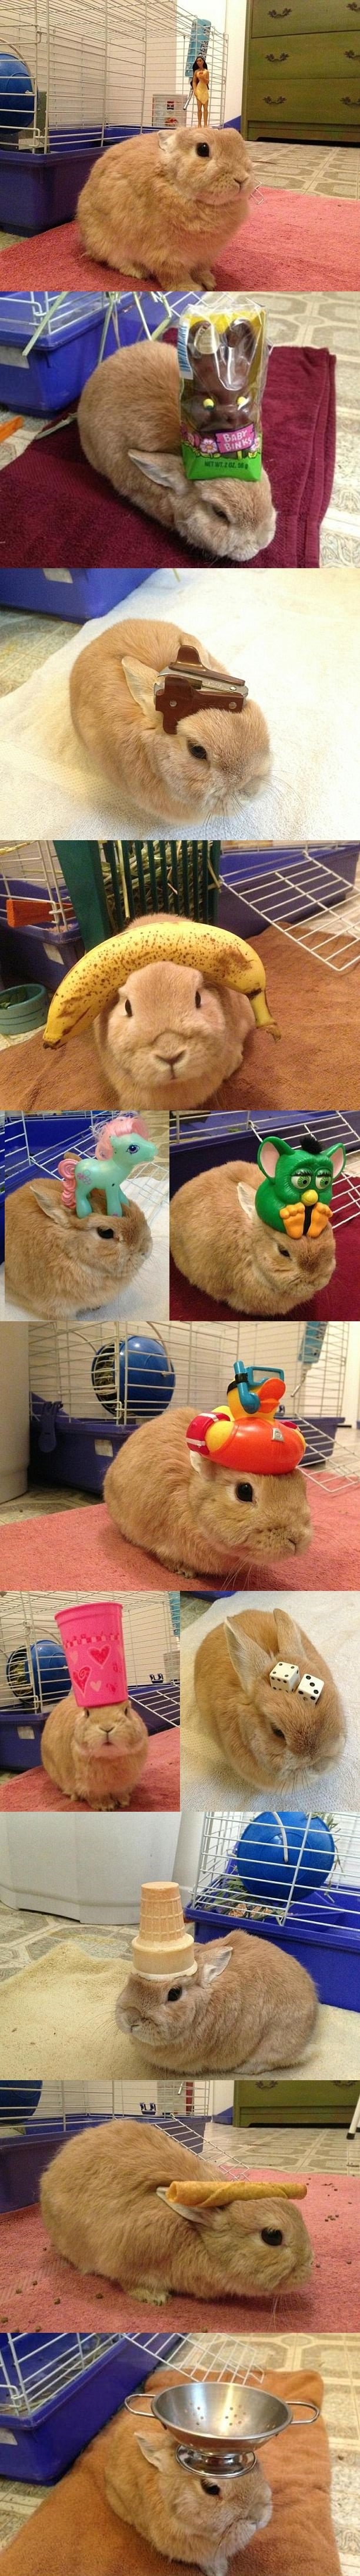 Vinnie, the balancing rabbit